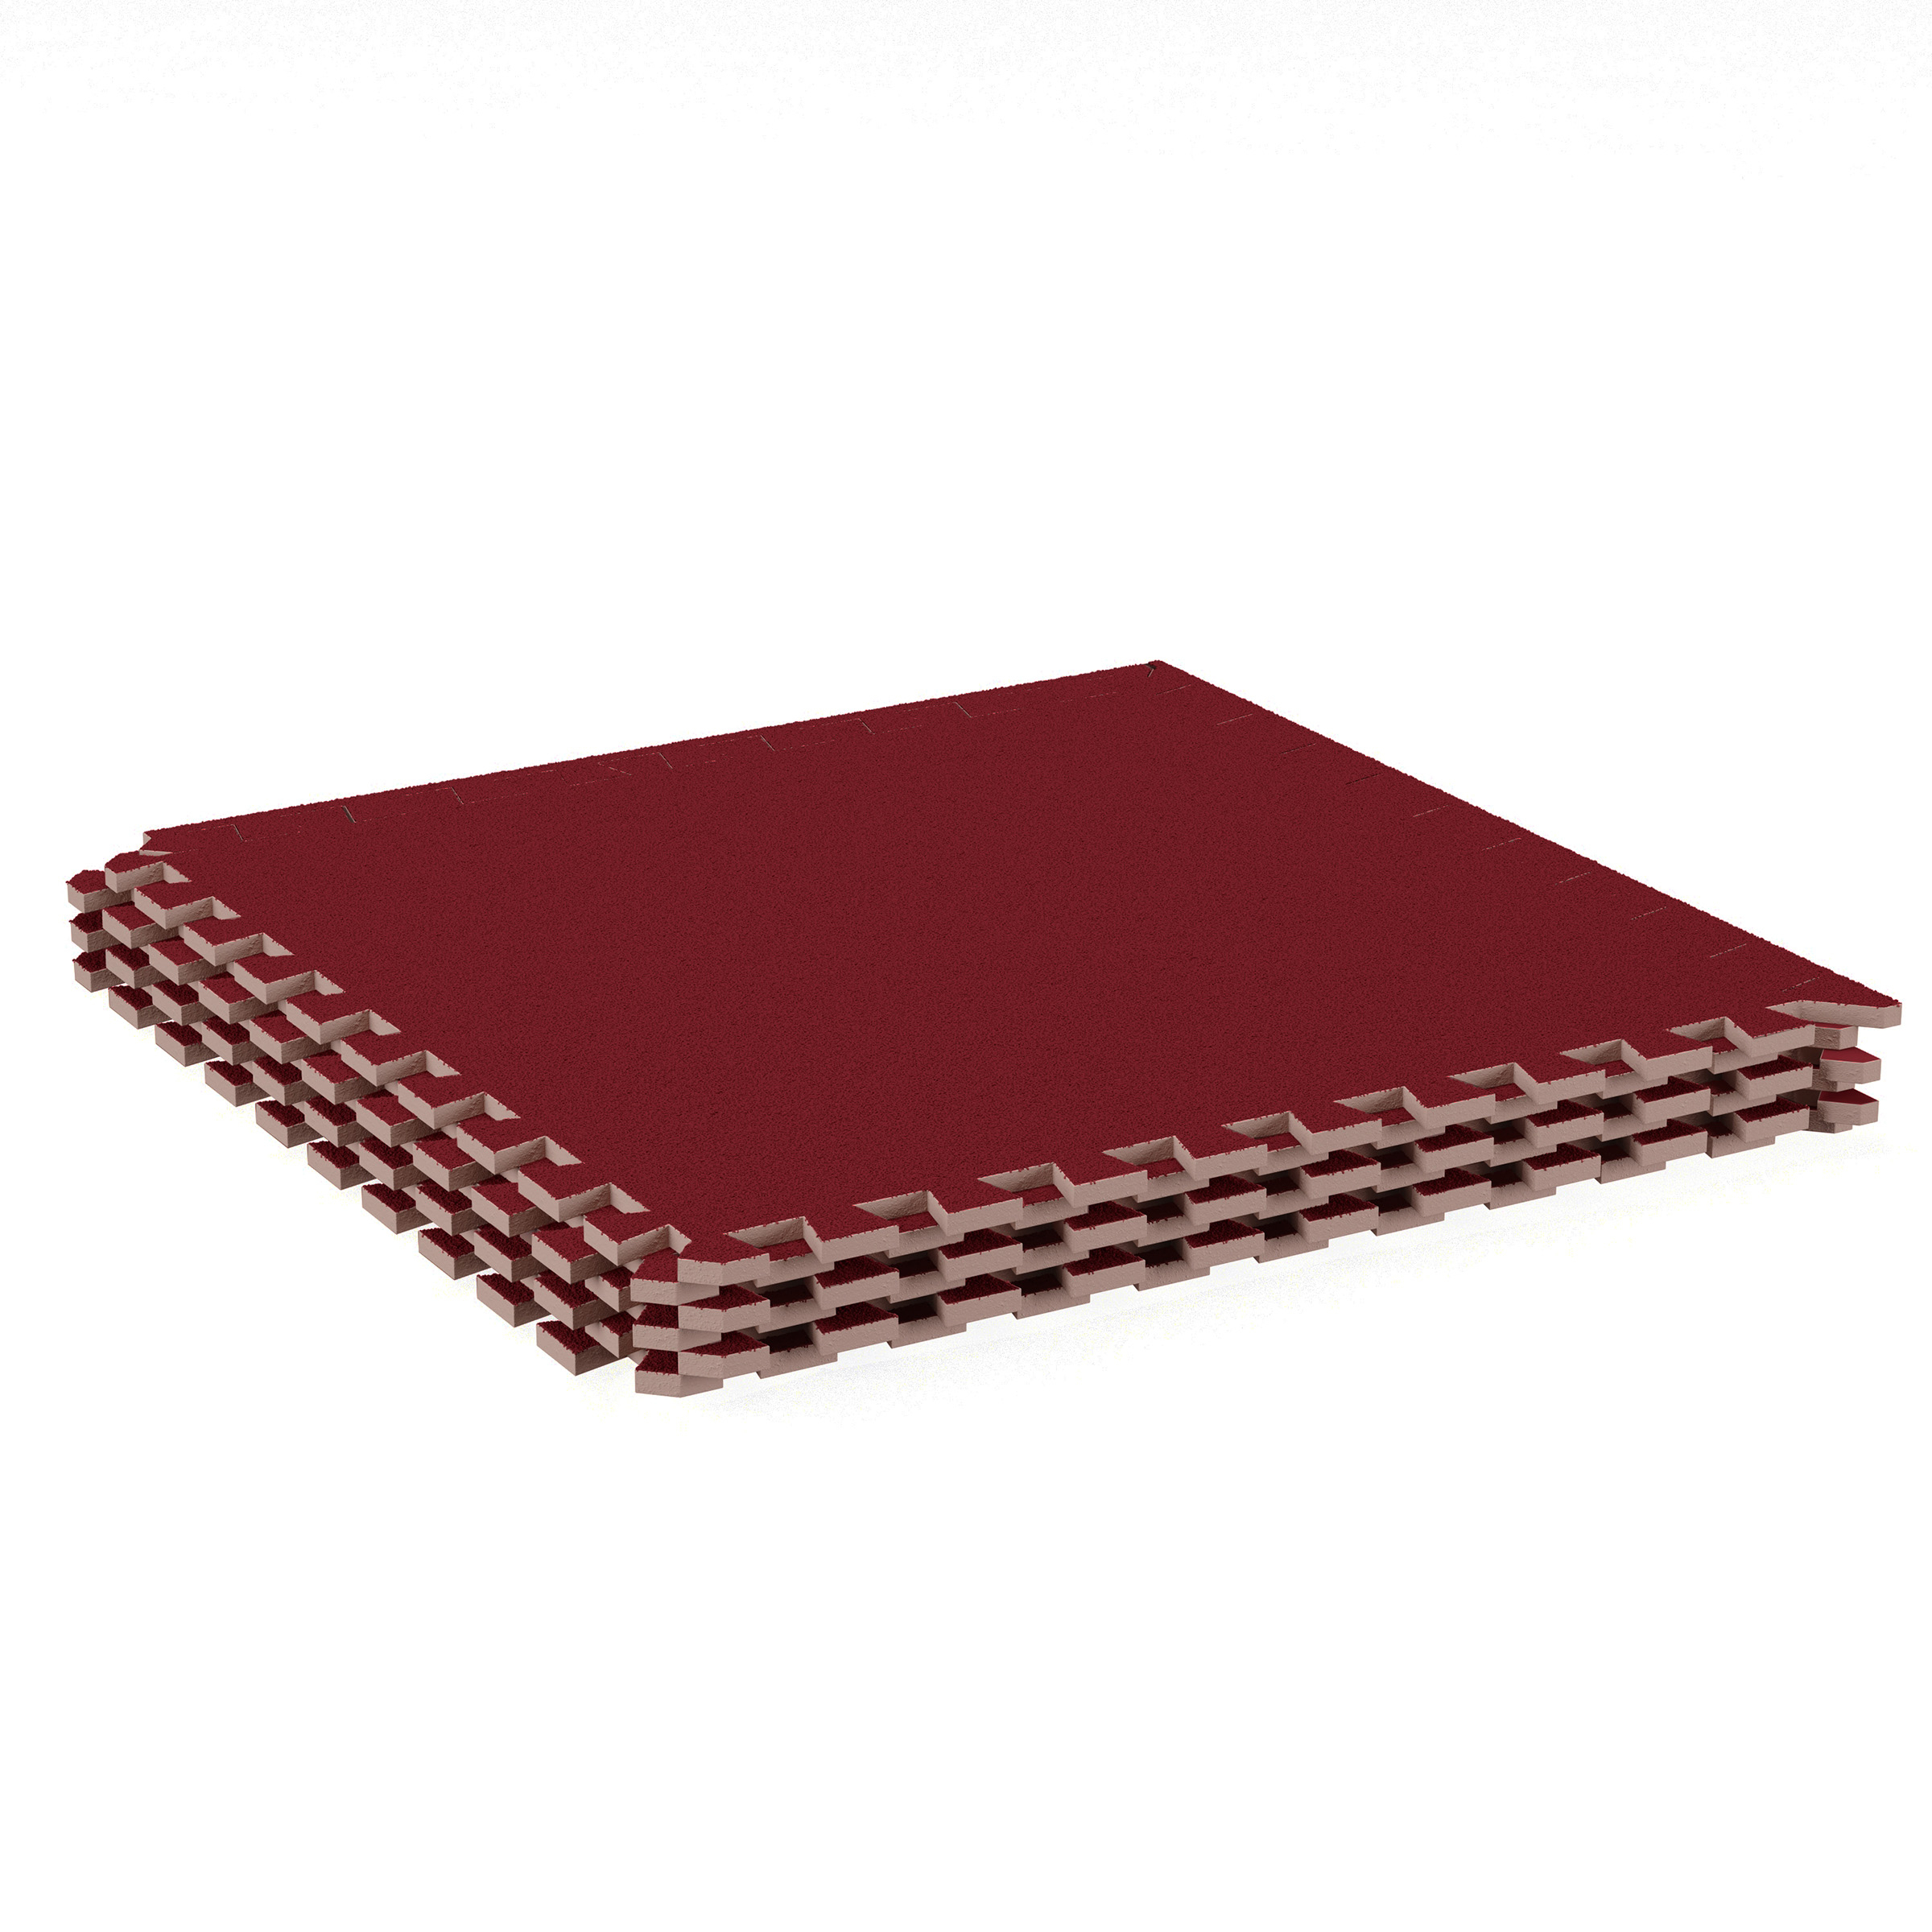 6 Pack Carpeted Interlocking Foam Floor Tiles 24 Inch Kids Garage Basement - Red